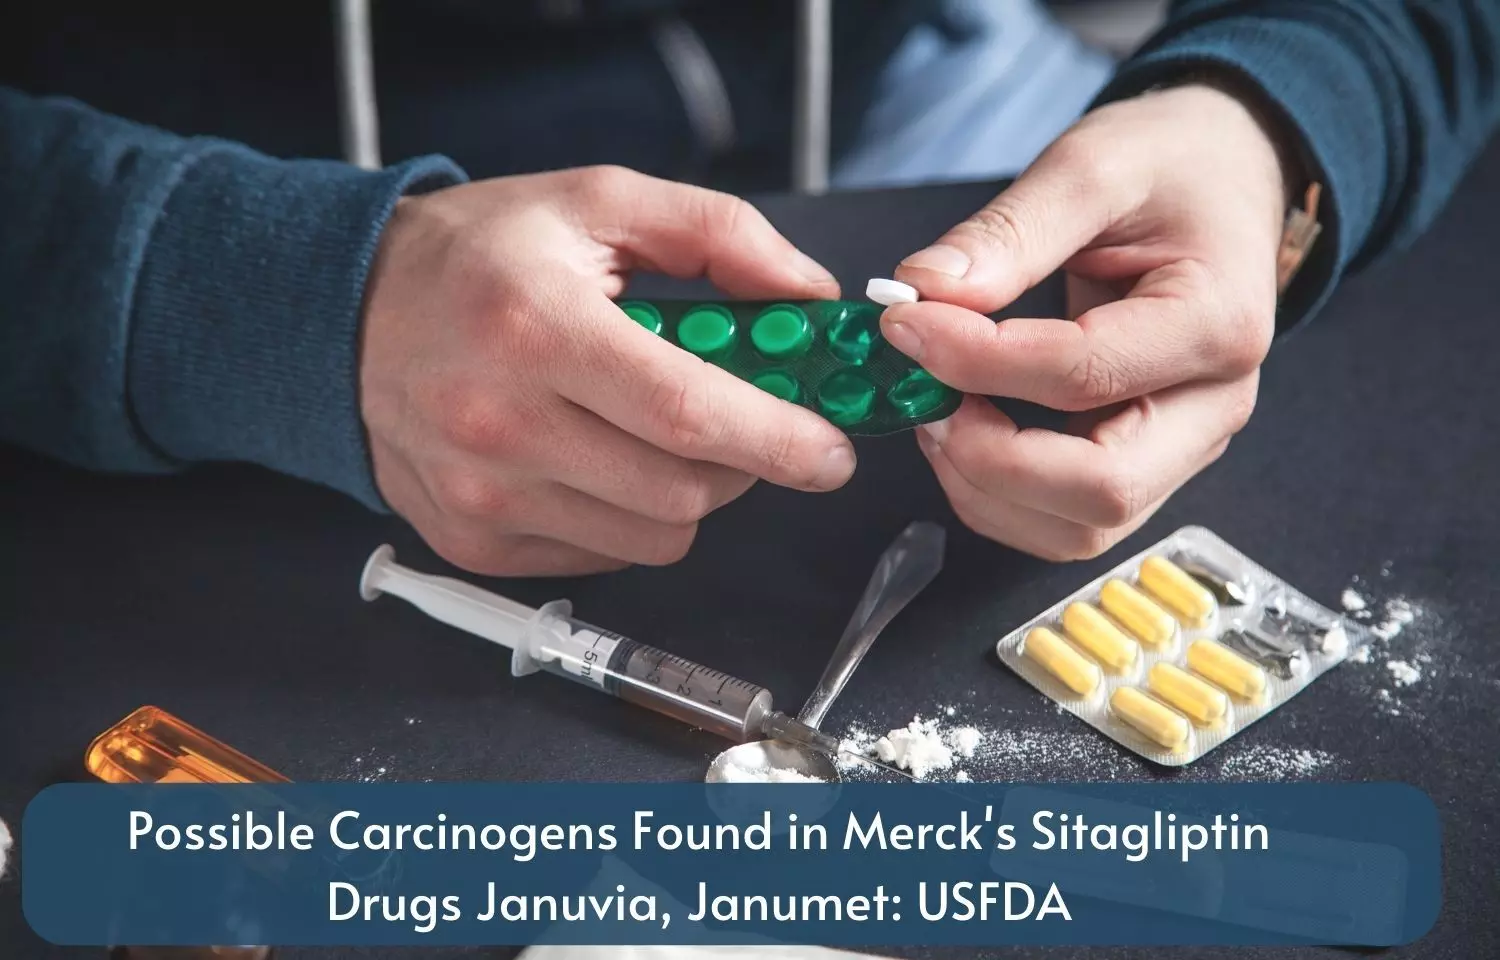 USFDA says possible carcinogens found in Mercks Sitagliptin drugs Januvia, Janumet